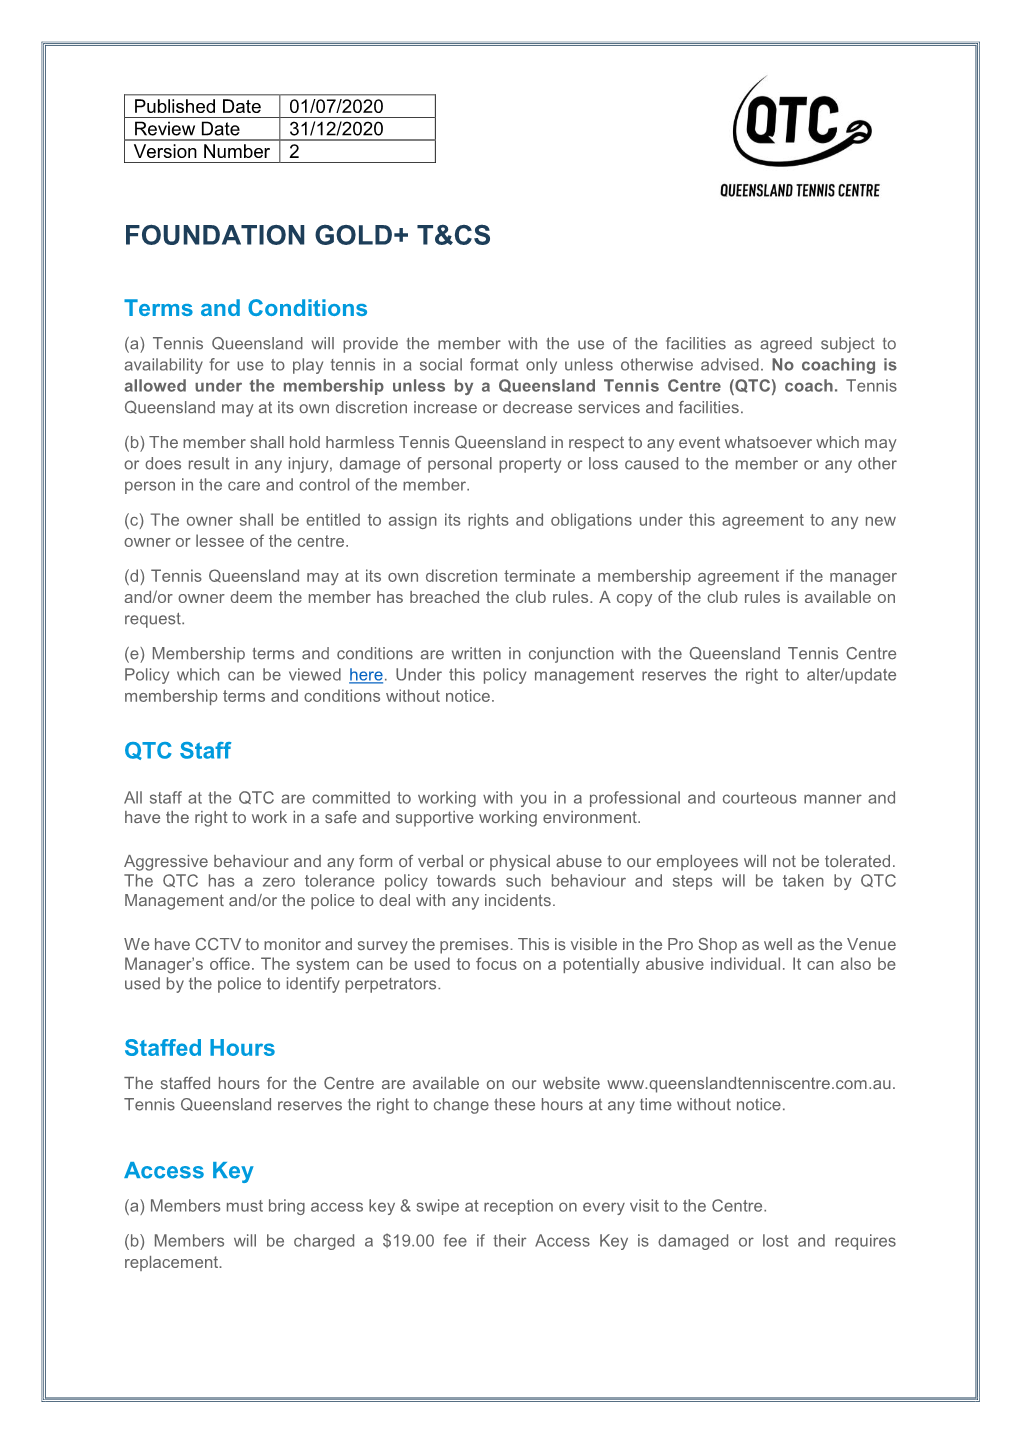 Foundation Gold+ T&Cs